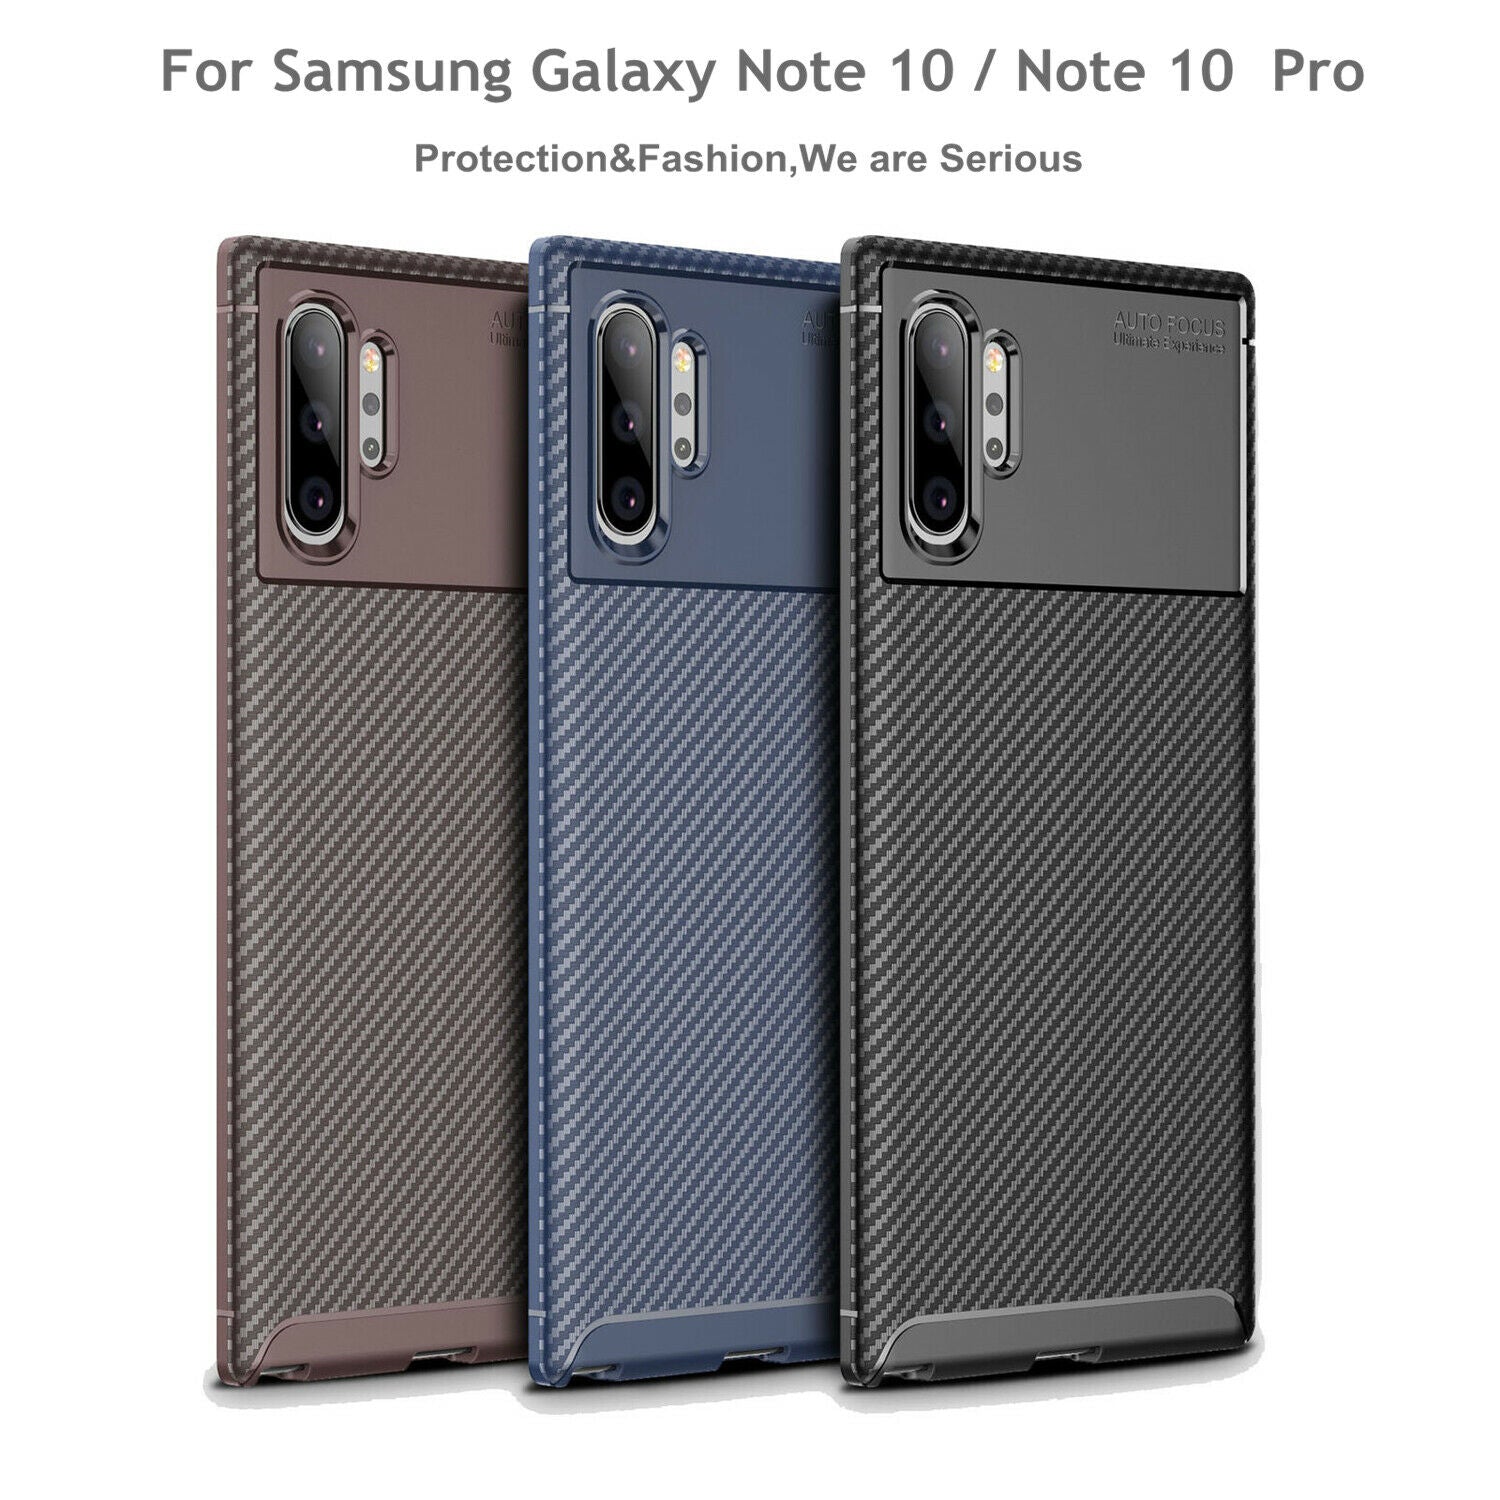 For Samsung Galaxy Note 10 Carbon Fiber Rubber Case TPU Slim Matte Cover